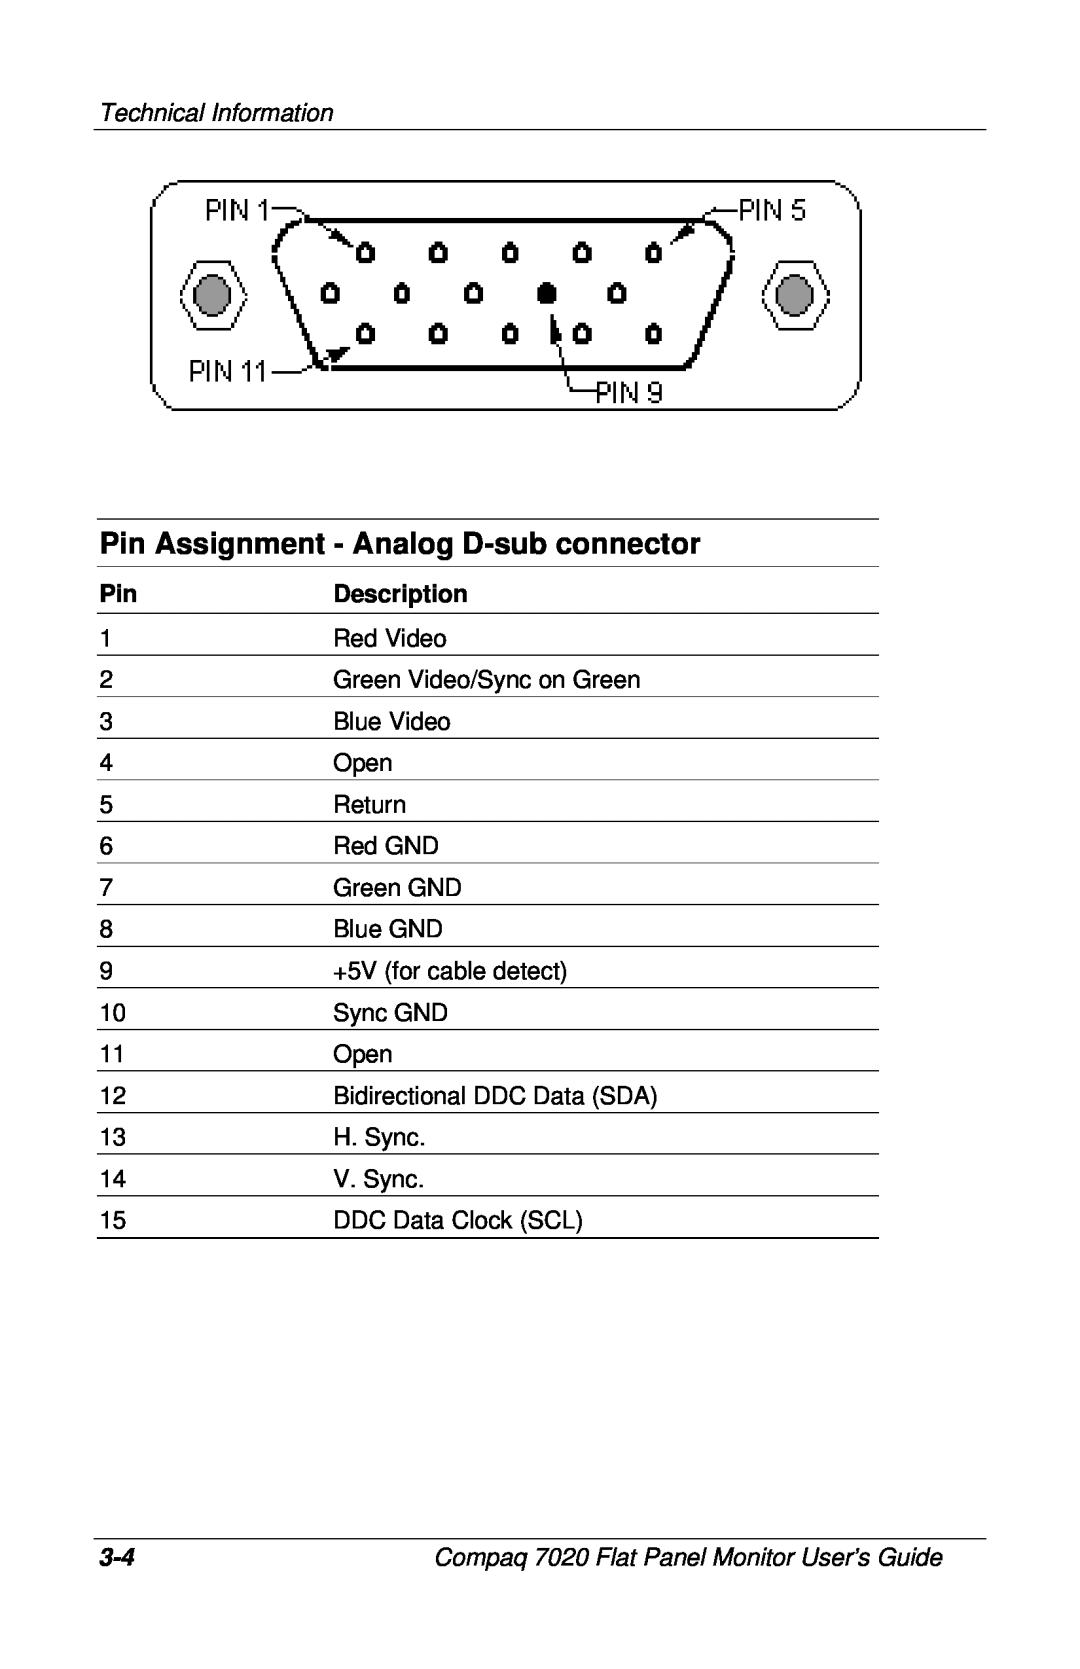 Compaq 7020 manual Pin Assignment - Analog D-sub connector, Technical Information, Description 